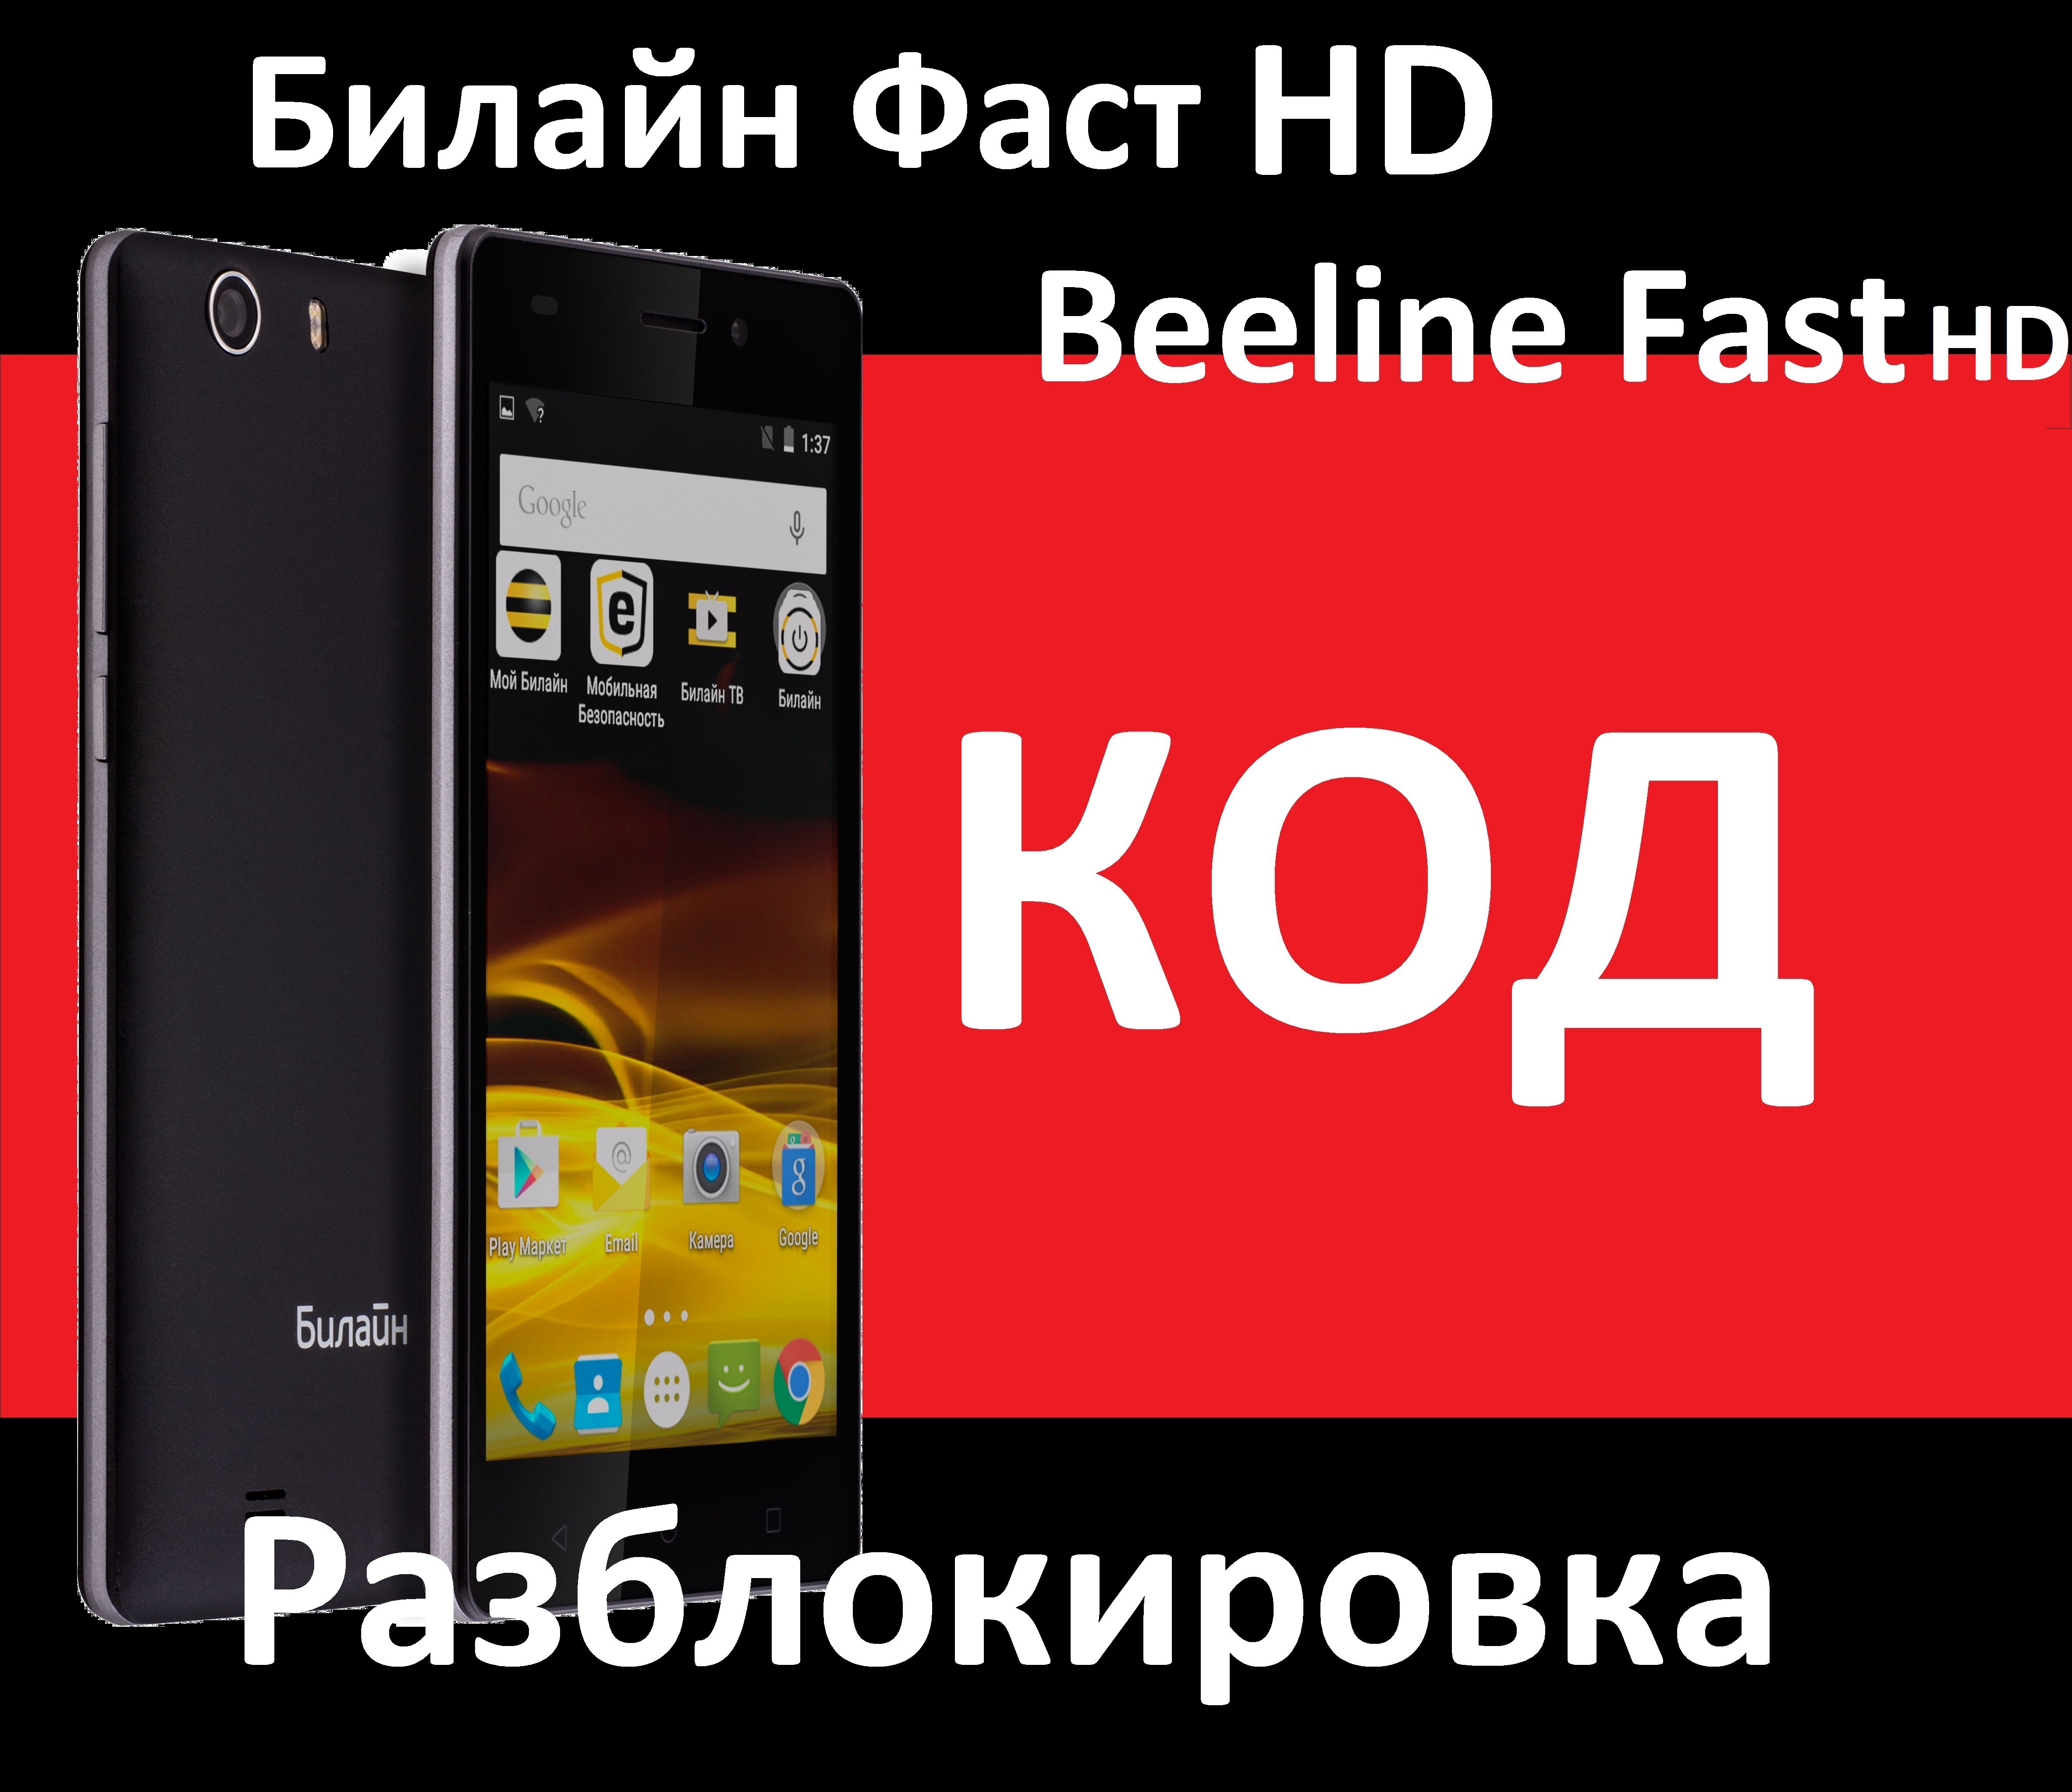 Билайн про купить. Beeline fast. Beeline fast 2. Код сети Билайн. NCK код для телефонов Билайн.